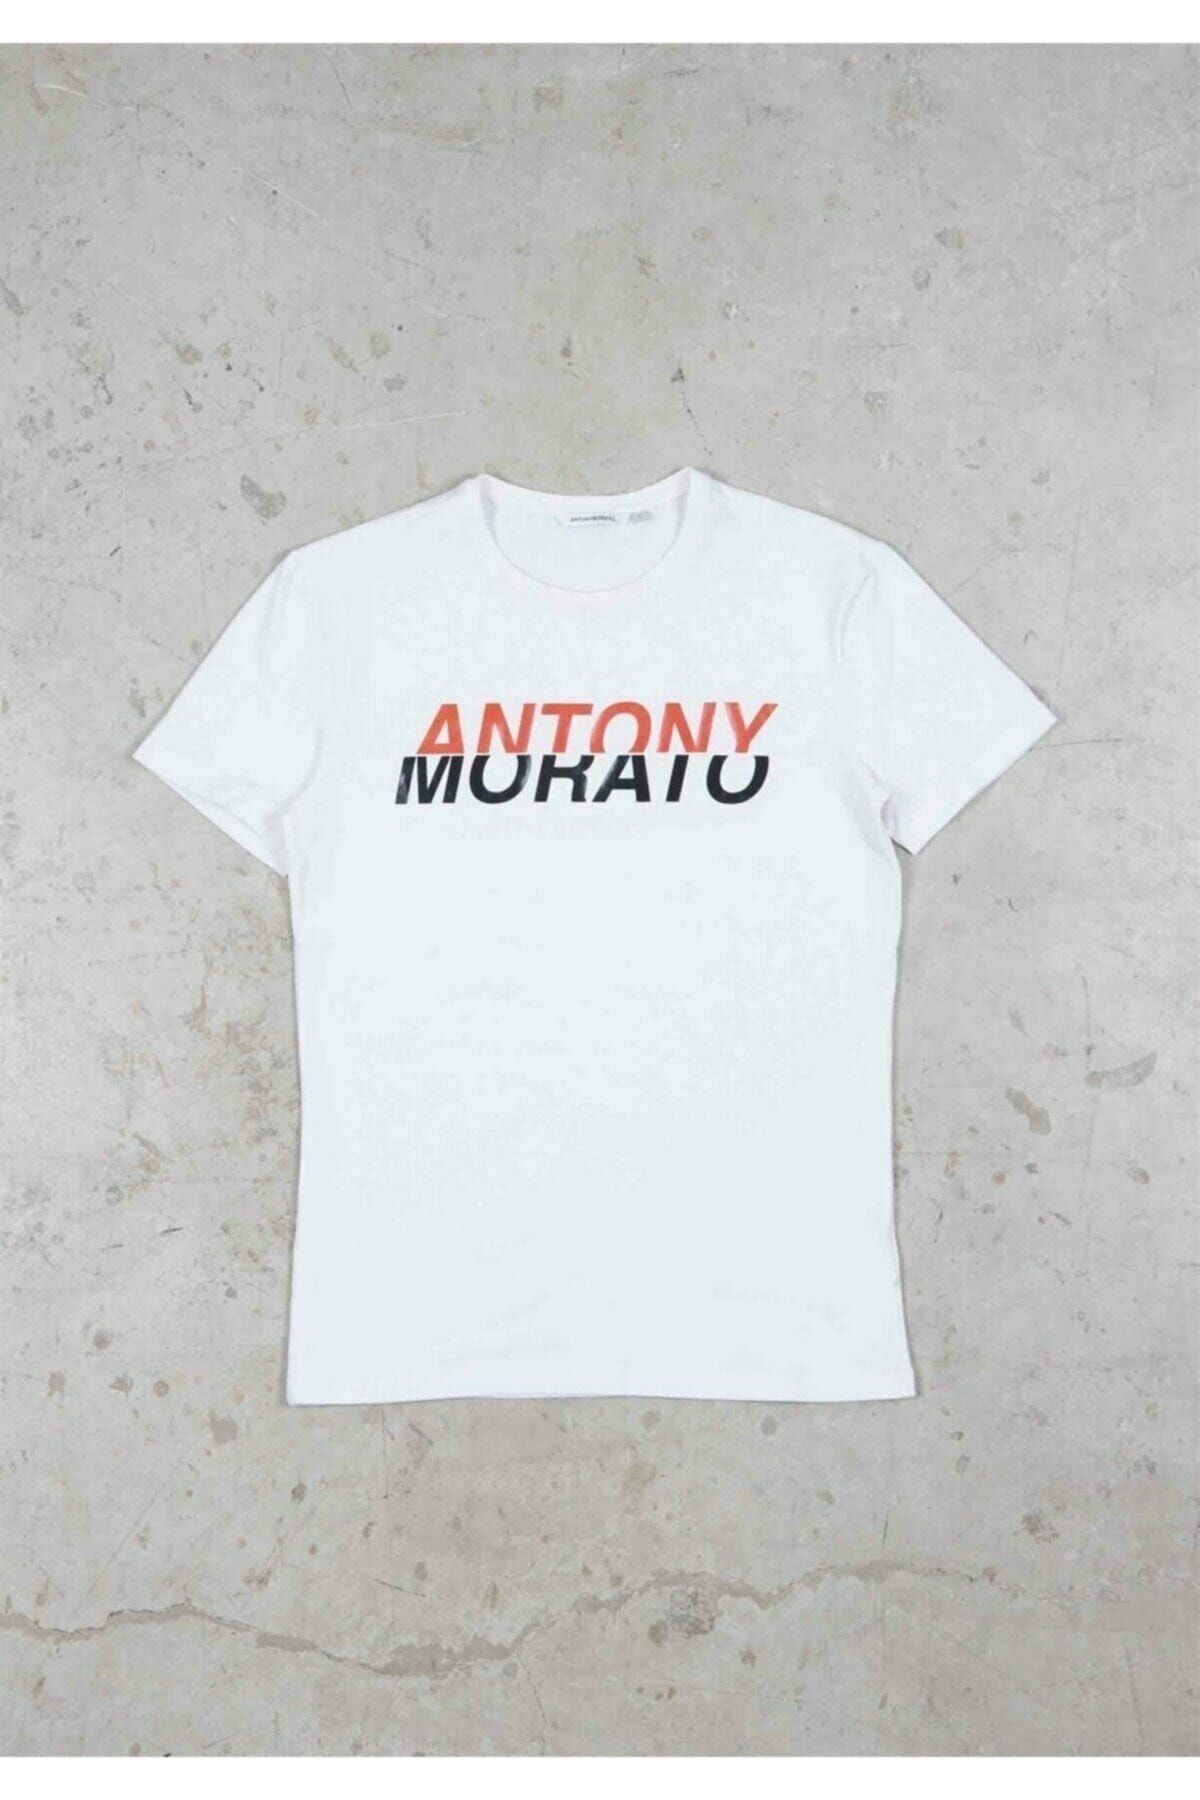 Antony Morato Erkek T-shirtmmks01399 Fa120001